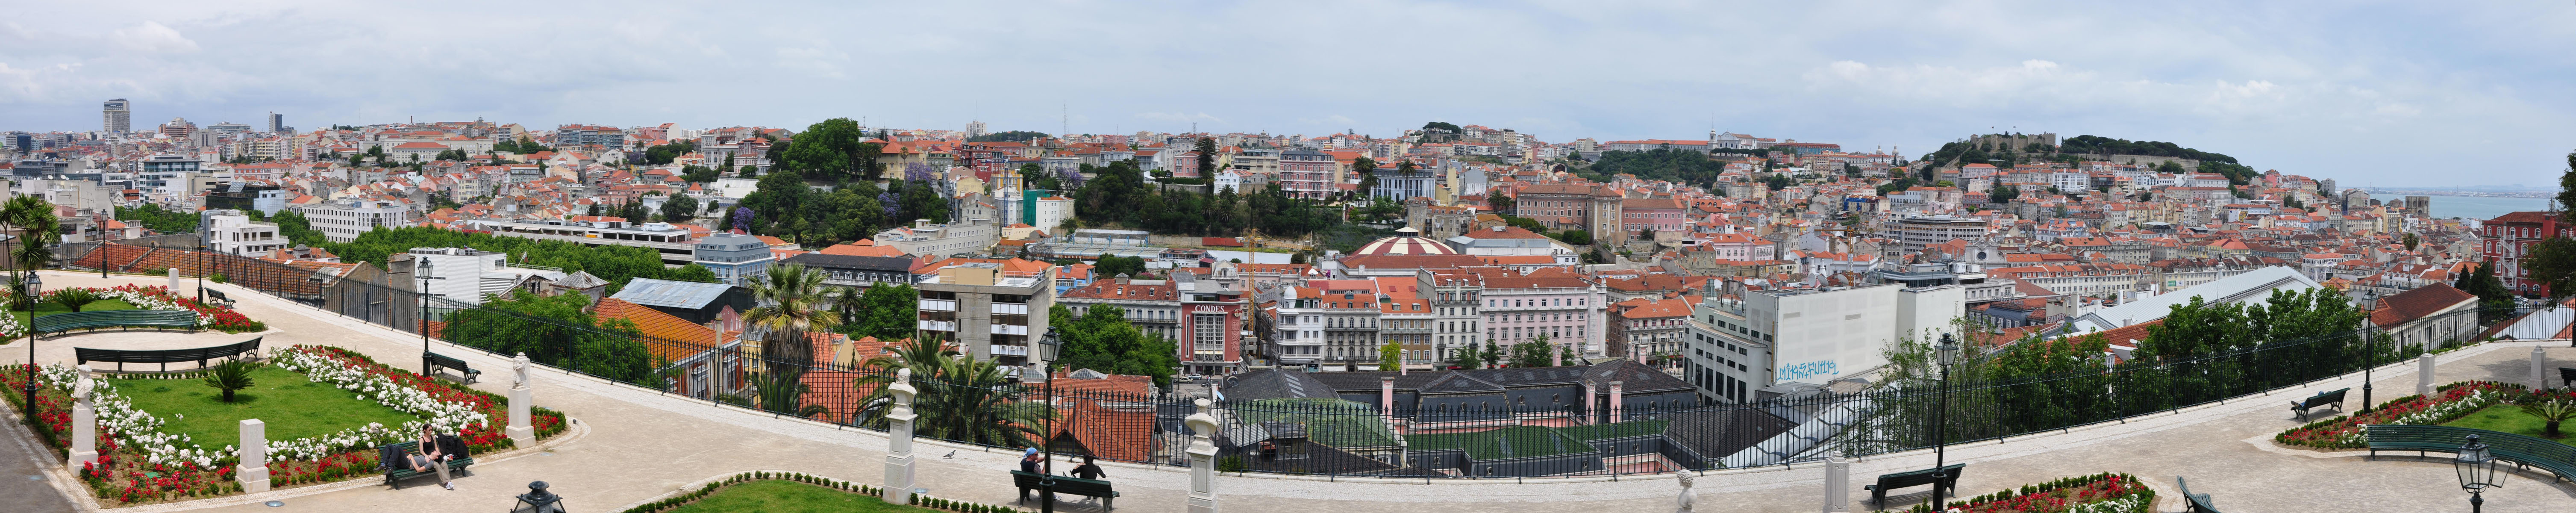 Lisbon - Portugal2.jpg